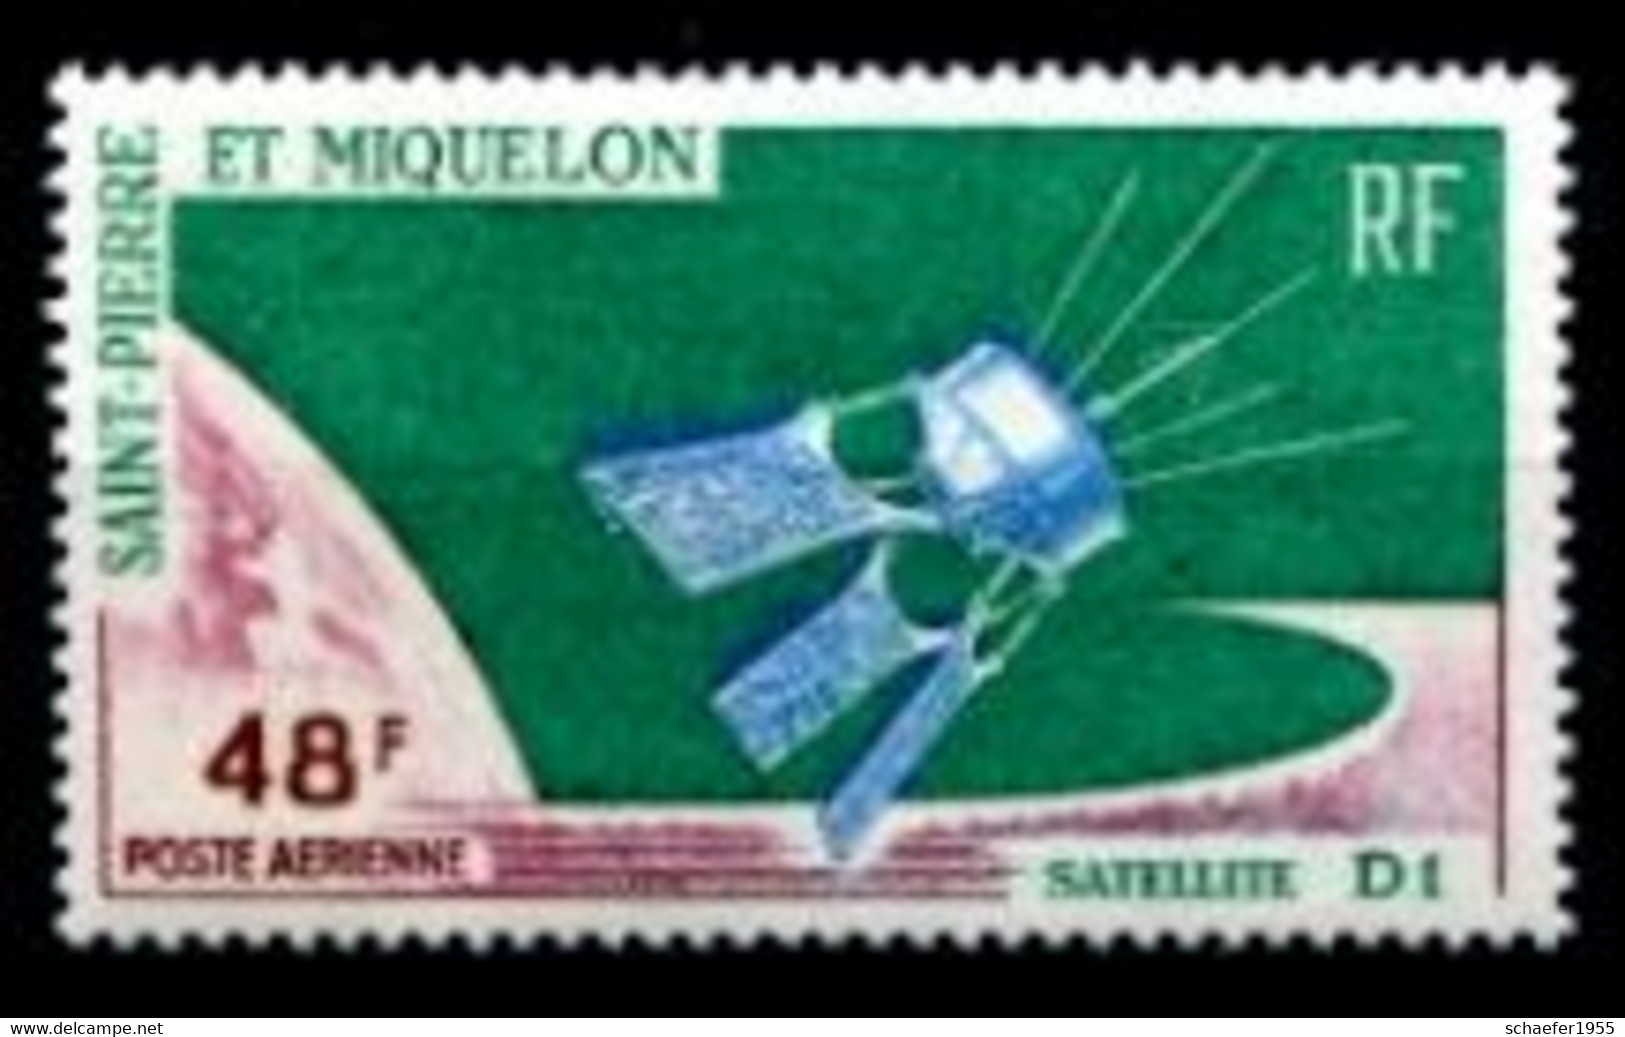 Saint Pierre Et Miquelon 1966 Satellite D1 FDC + Stamp - Nordamerika